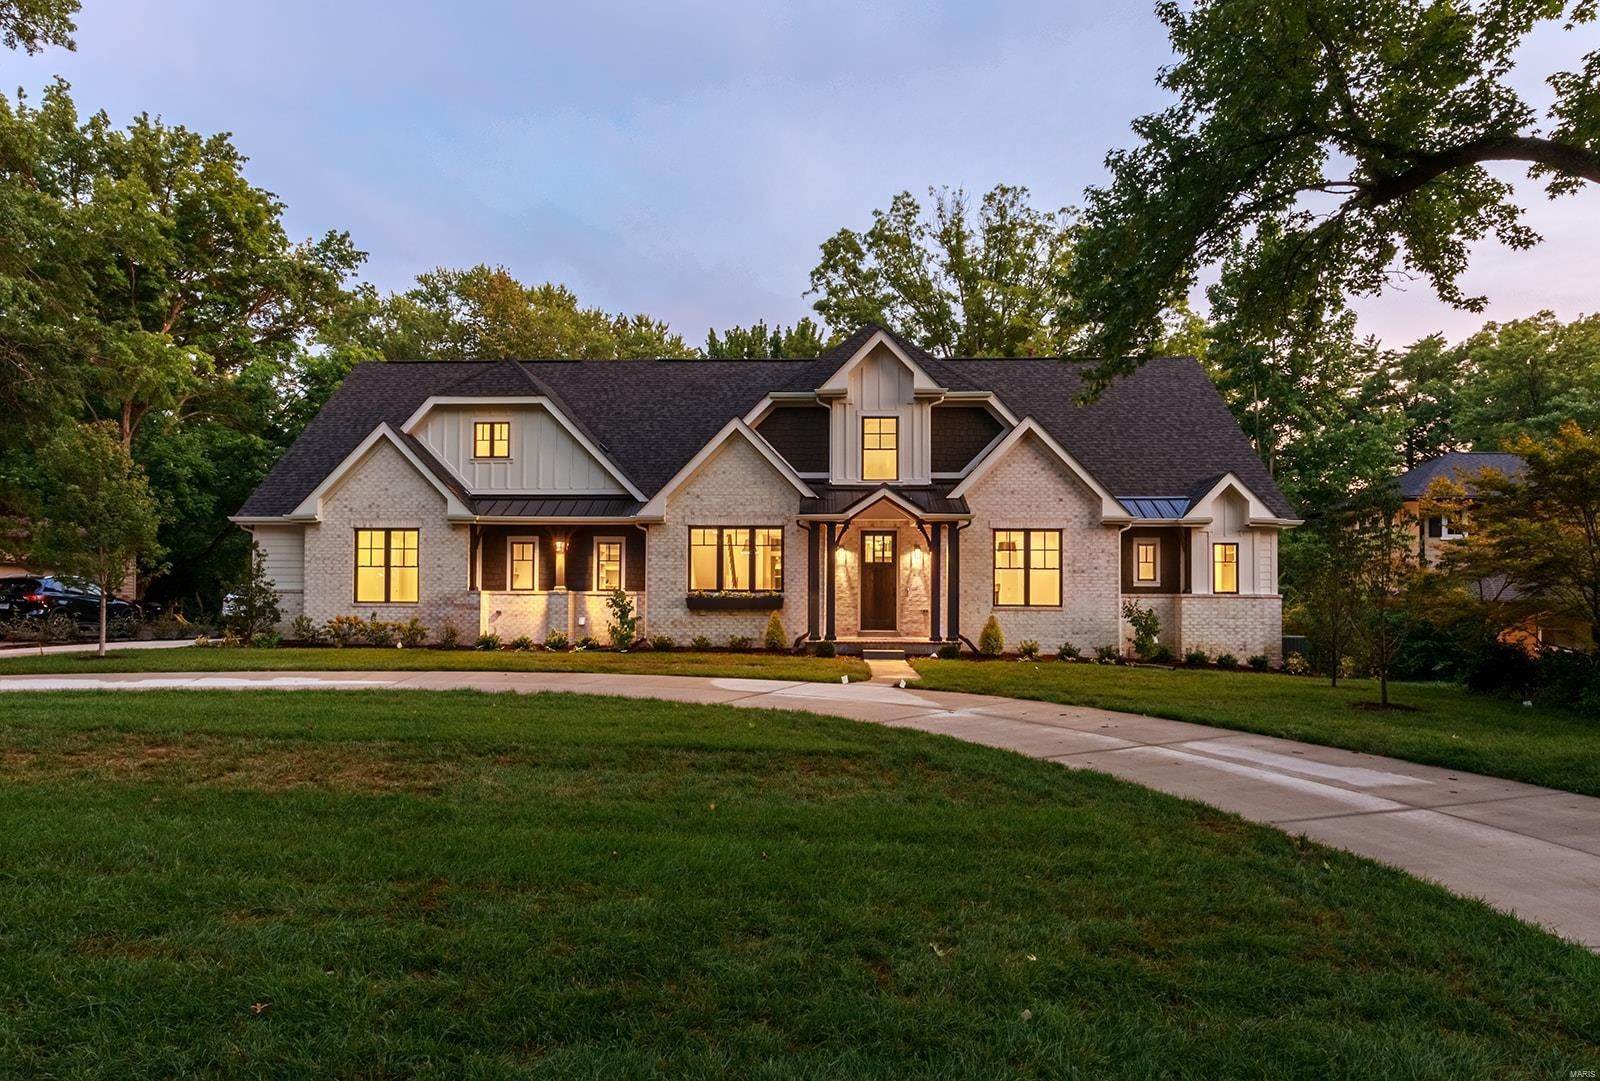 Property for Sale at 14 Ladue Ridge Ladue, Missouri 63124 United States